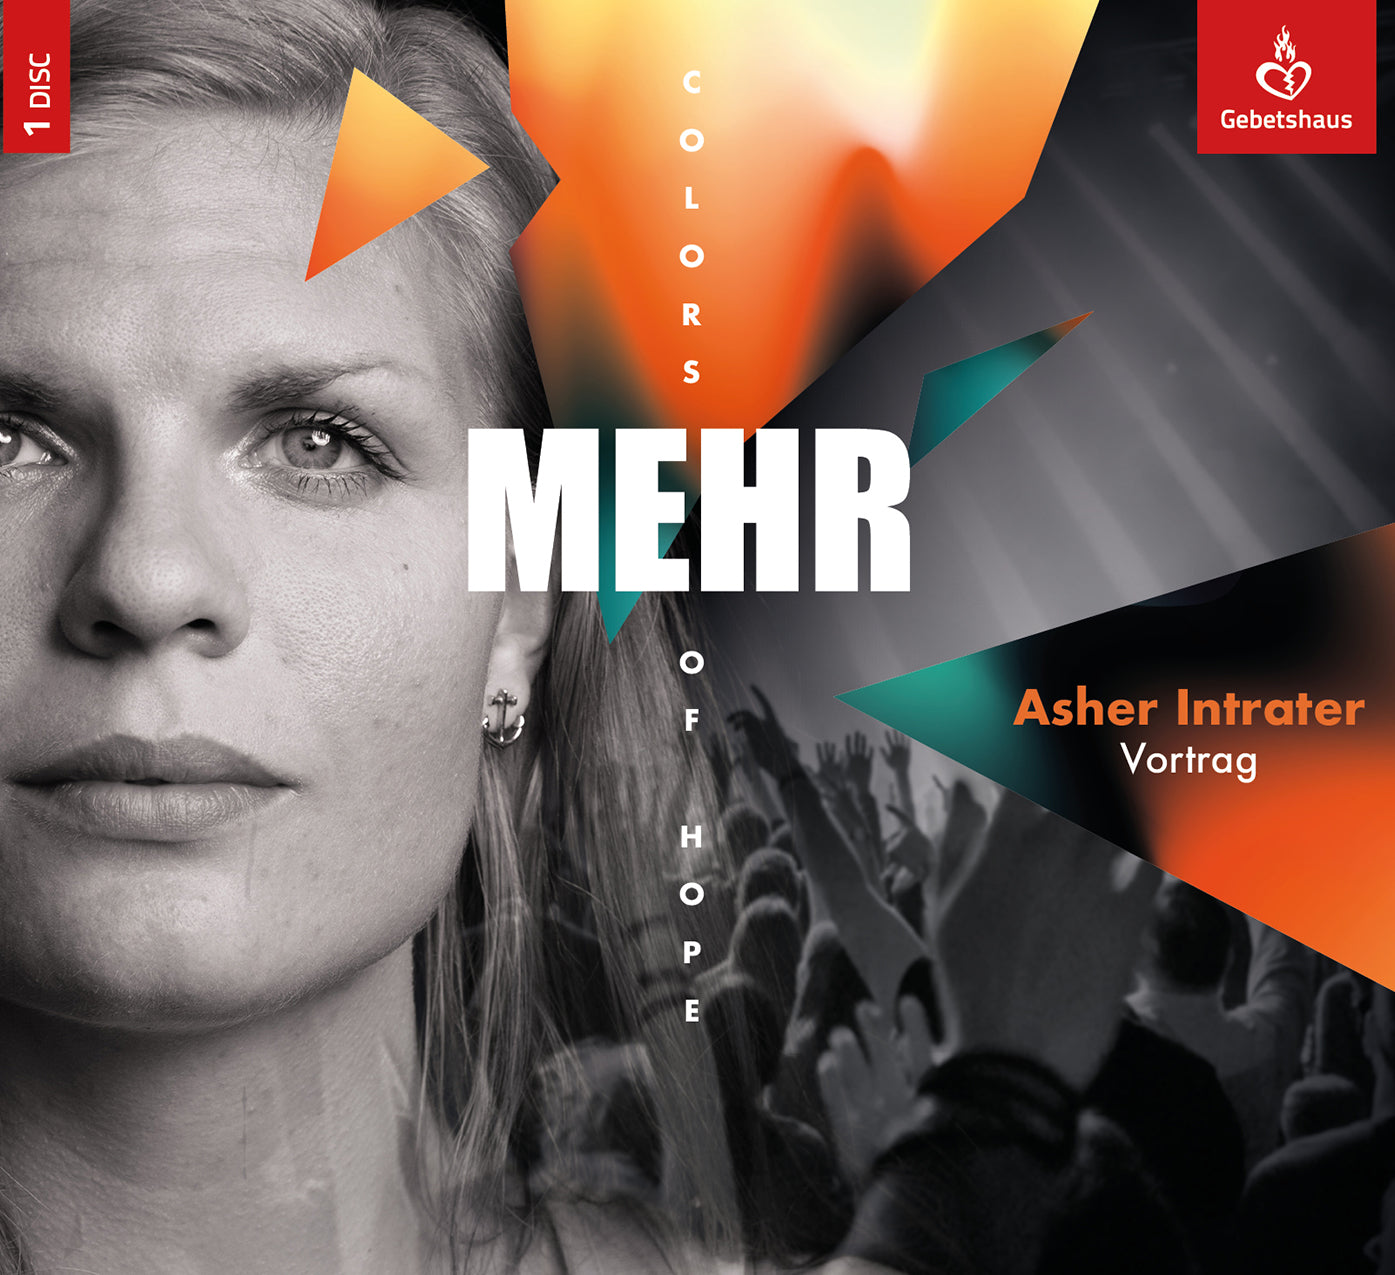 Asher Intrater - MEHR 2020 | CD - Gebetshaus Augsburg | Shop